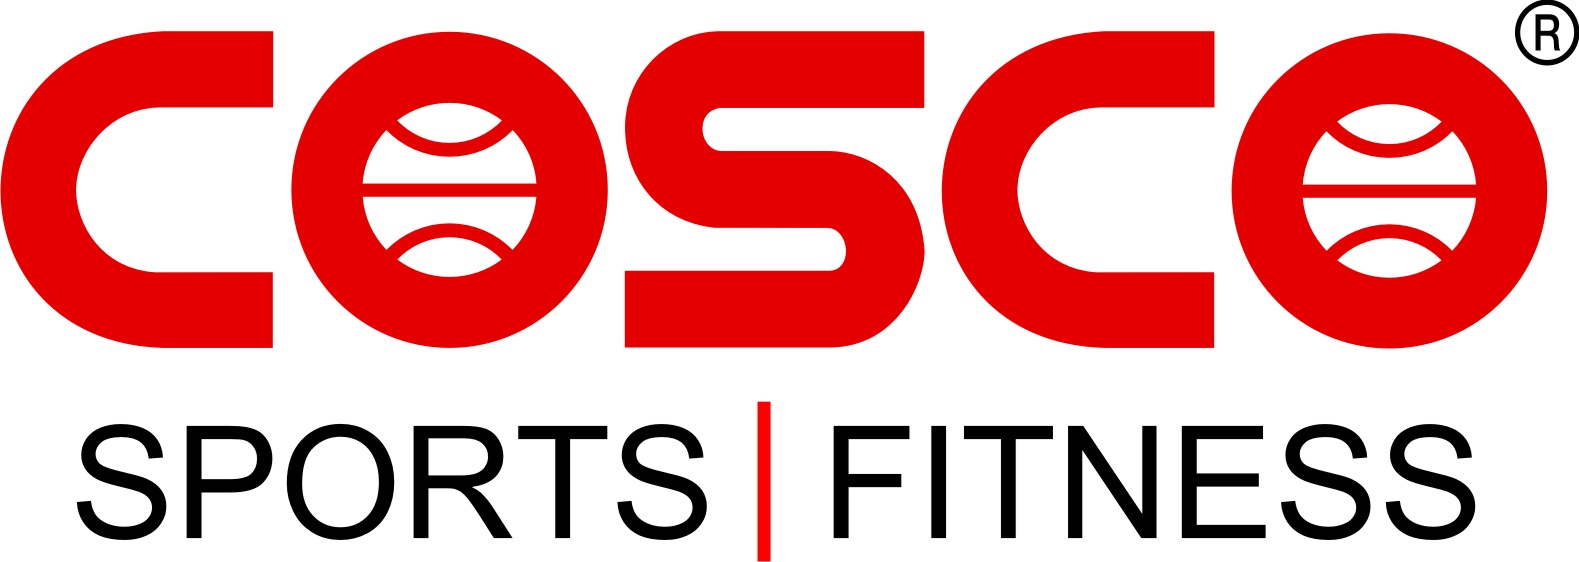 cosco corporate logo 2012